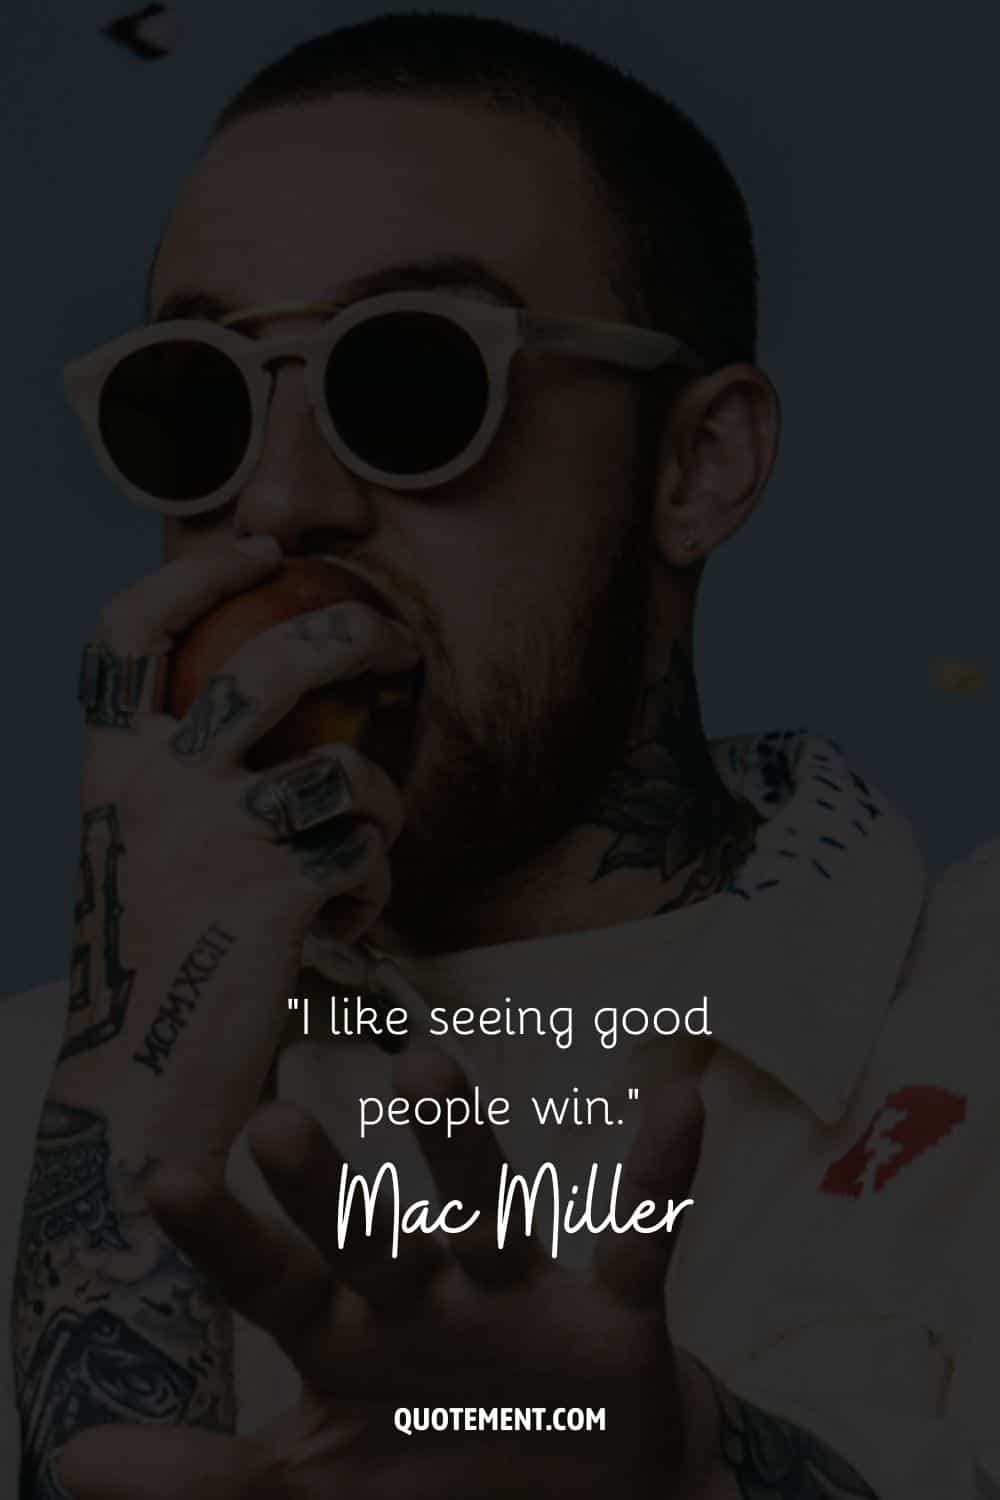 “I like seeing good people win.” – Mac Miller